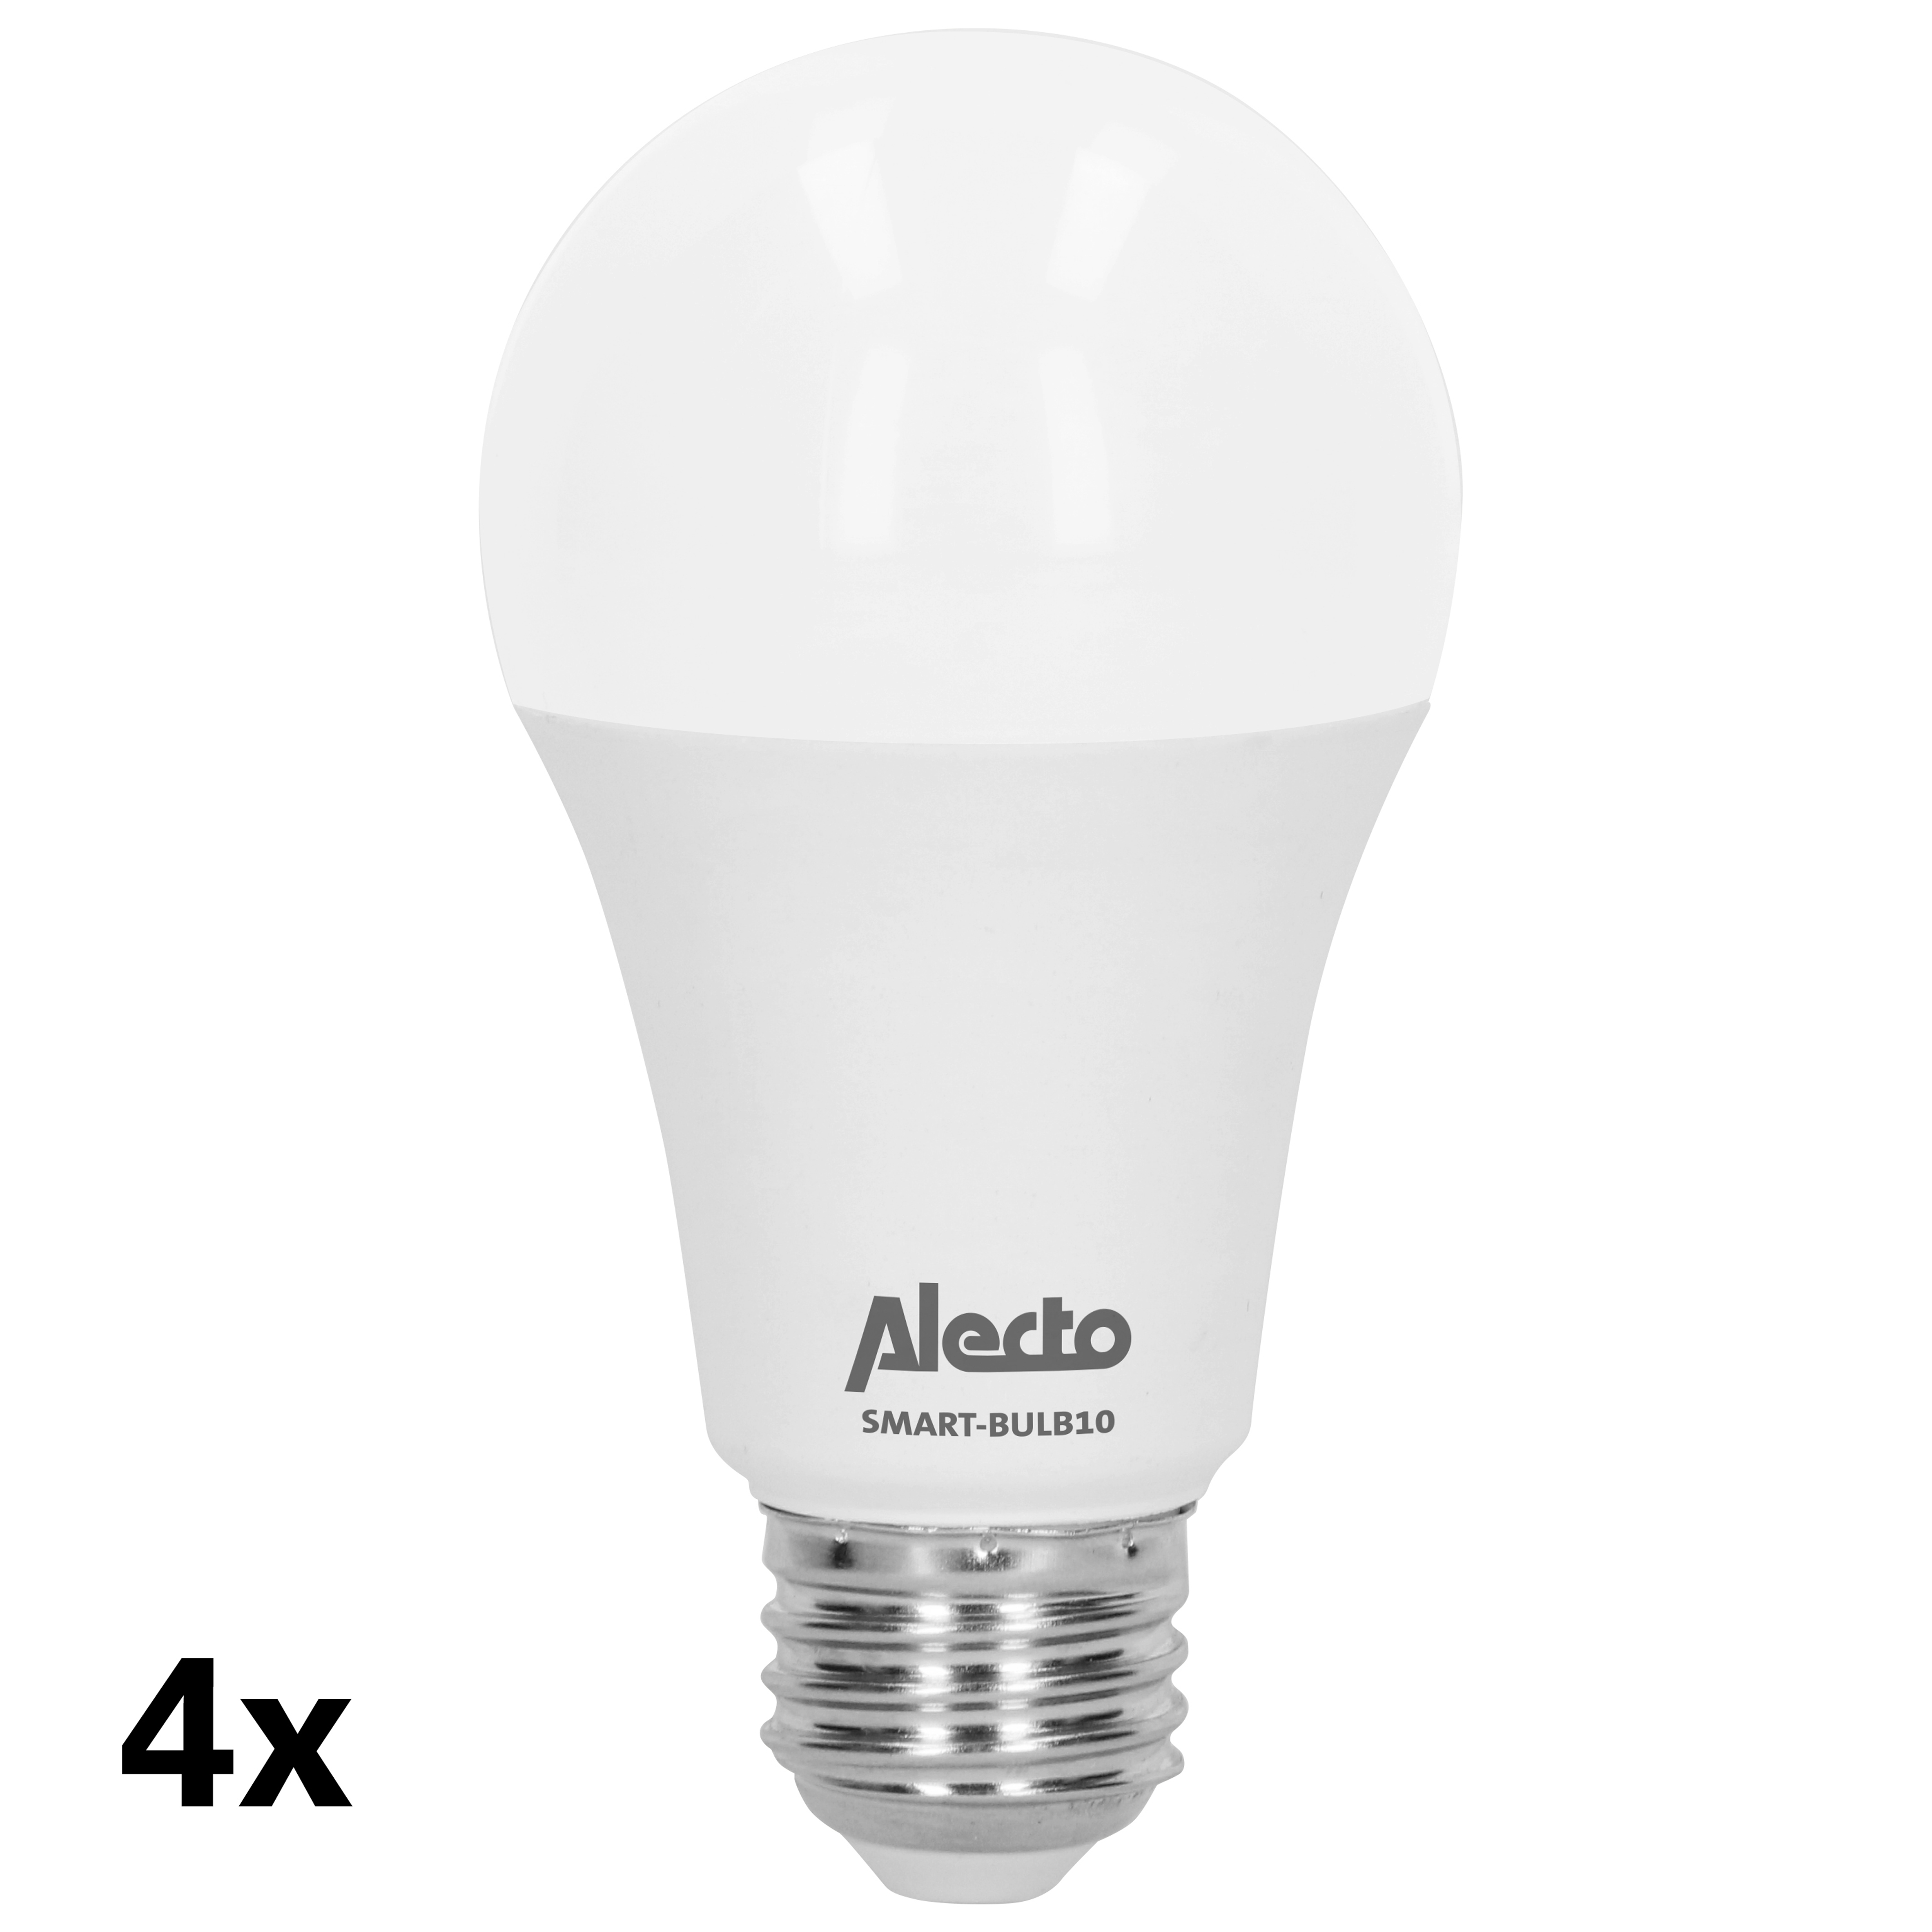 Weiß,Neutrales Weiß,RGB,Sehr SMART-BULB10 ALECTO Weiß - Kaltes warmes smarte,mehrfarbige Pack 4er 4-PACK Weiß,Warmes WLAN-LED-Glühlampen mit E27-Sockel